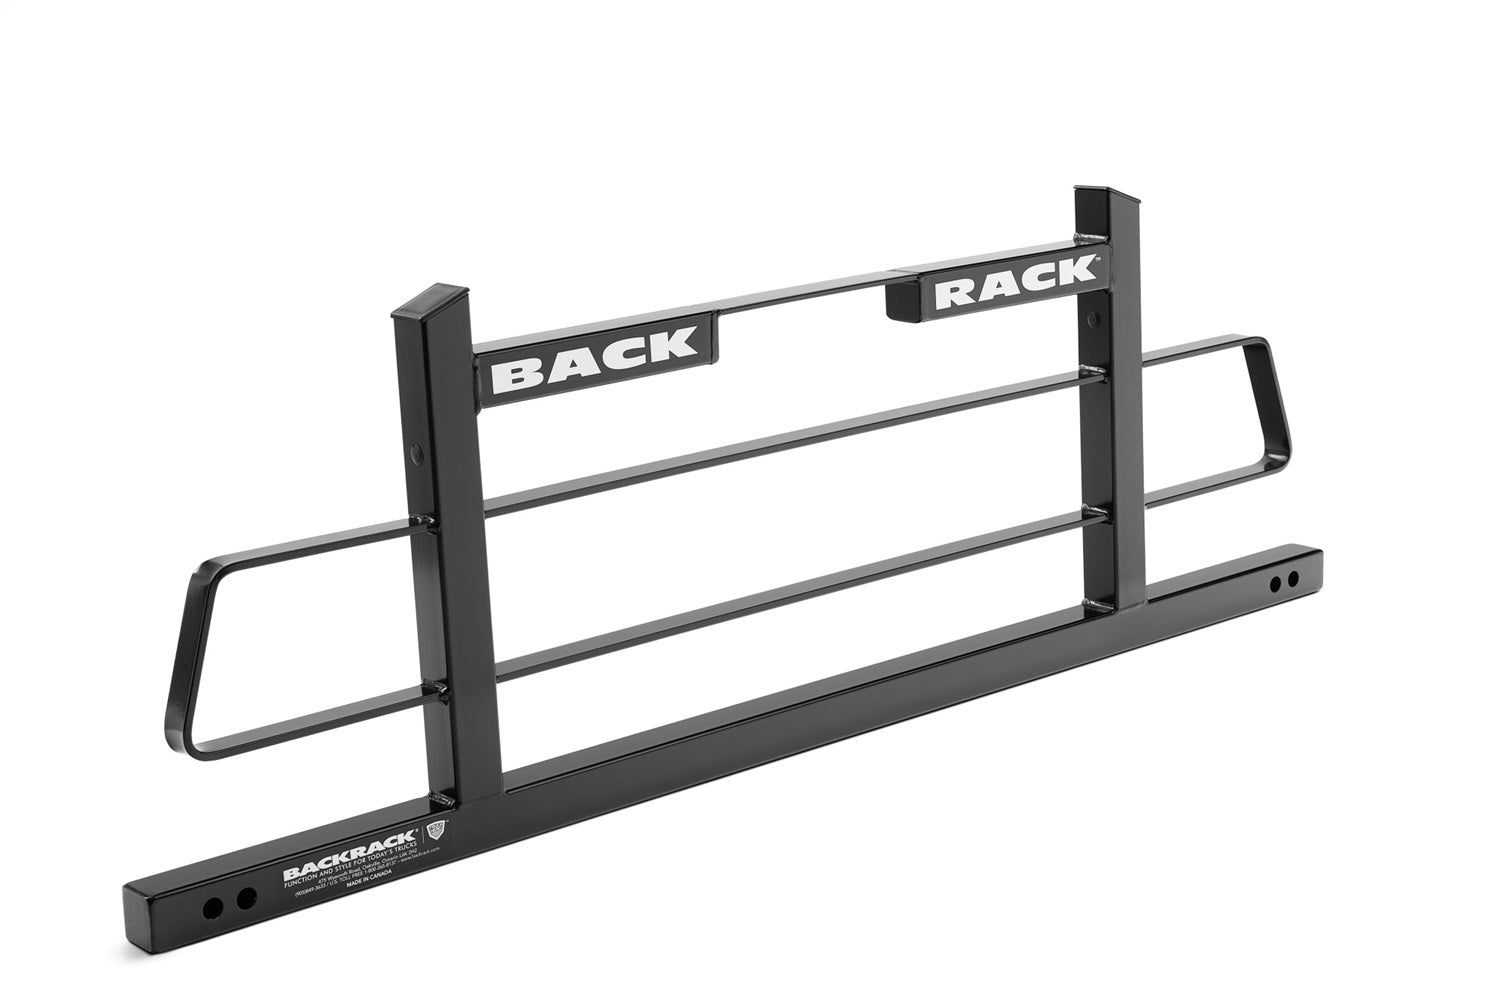 Backrack 15020 Backrack Headache Rack Frame